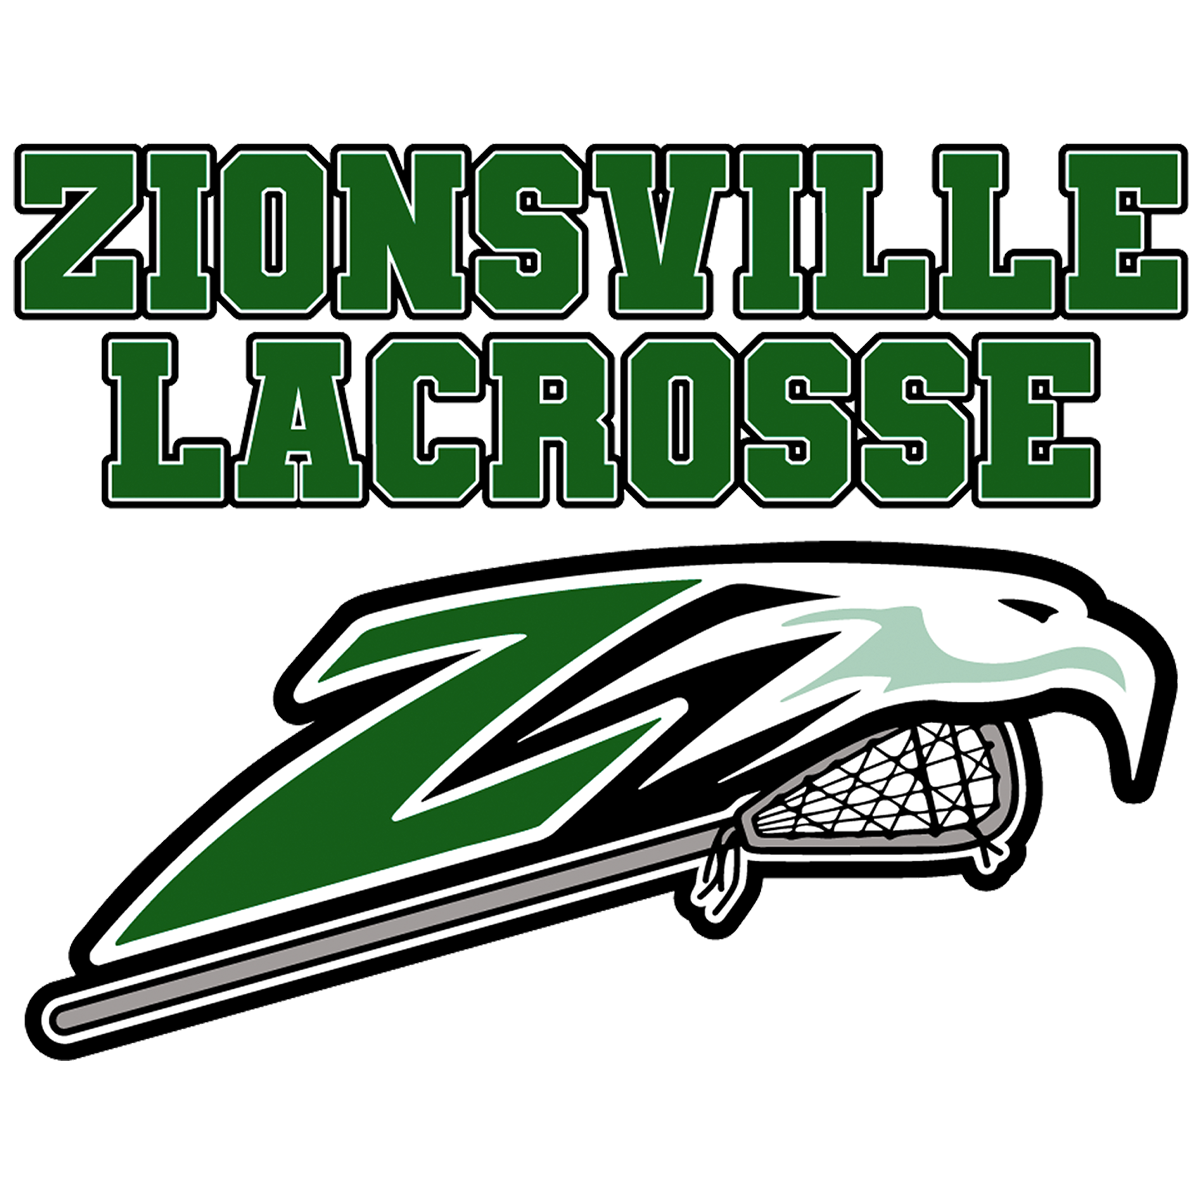 Zionsville Lacrosse Team Store